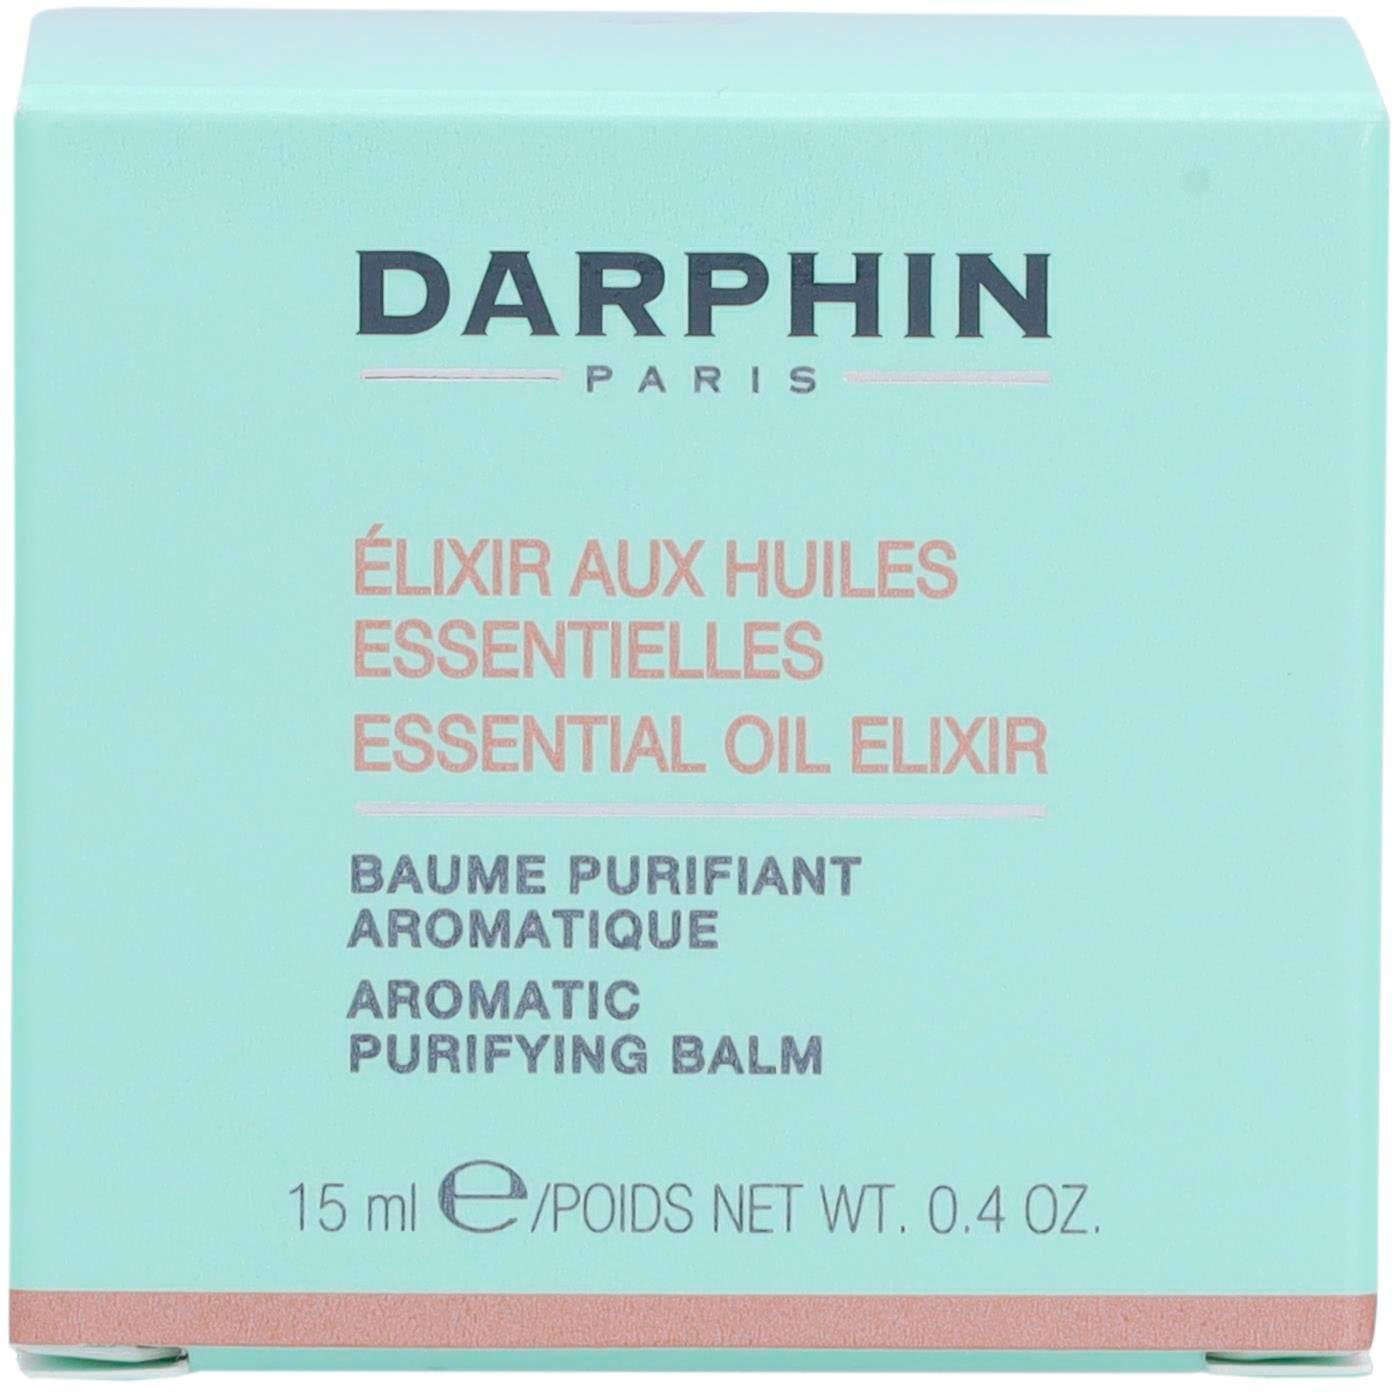 Gesichtspflege Aromatic Balm Purifying Darphin